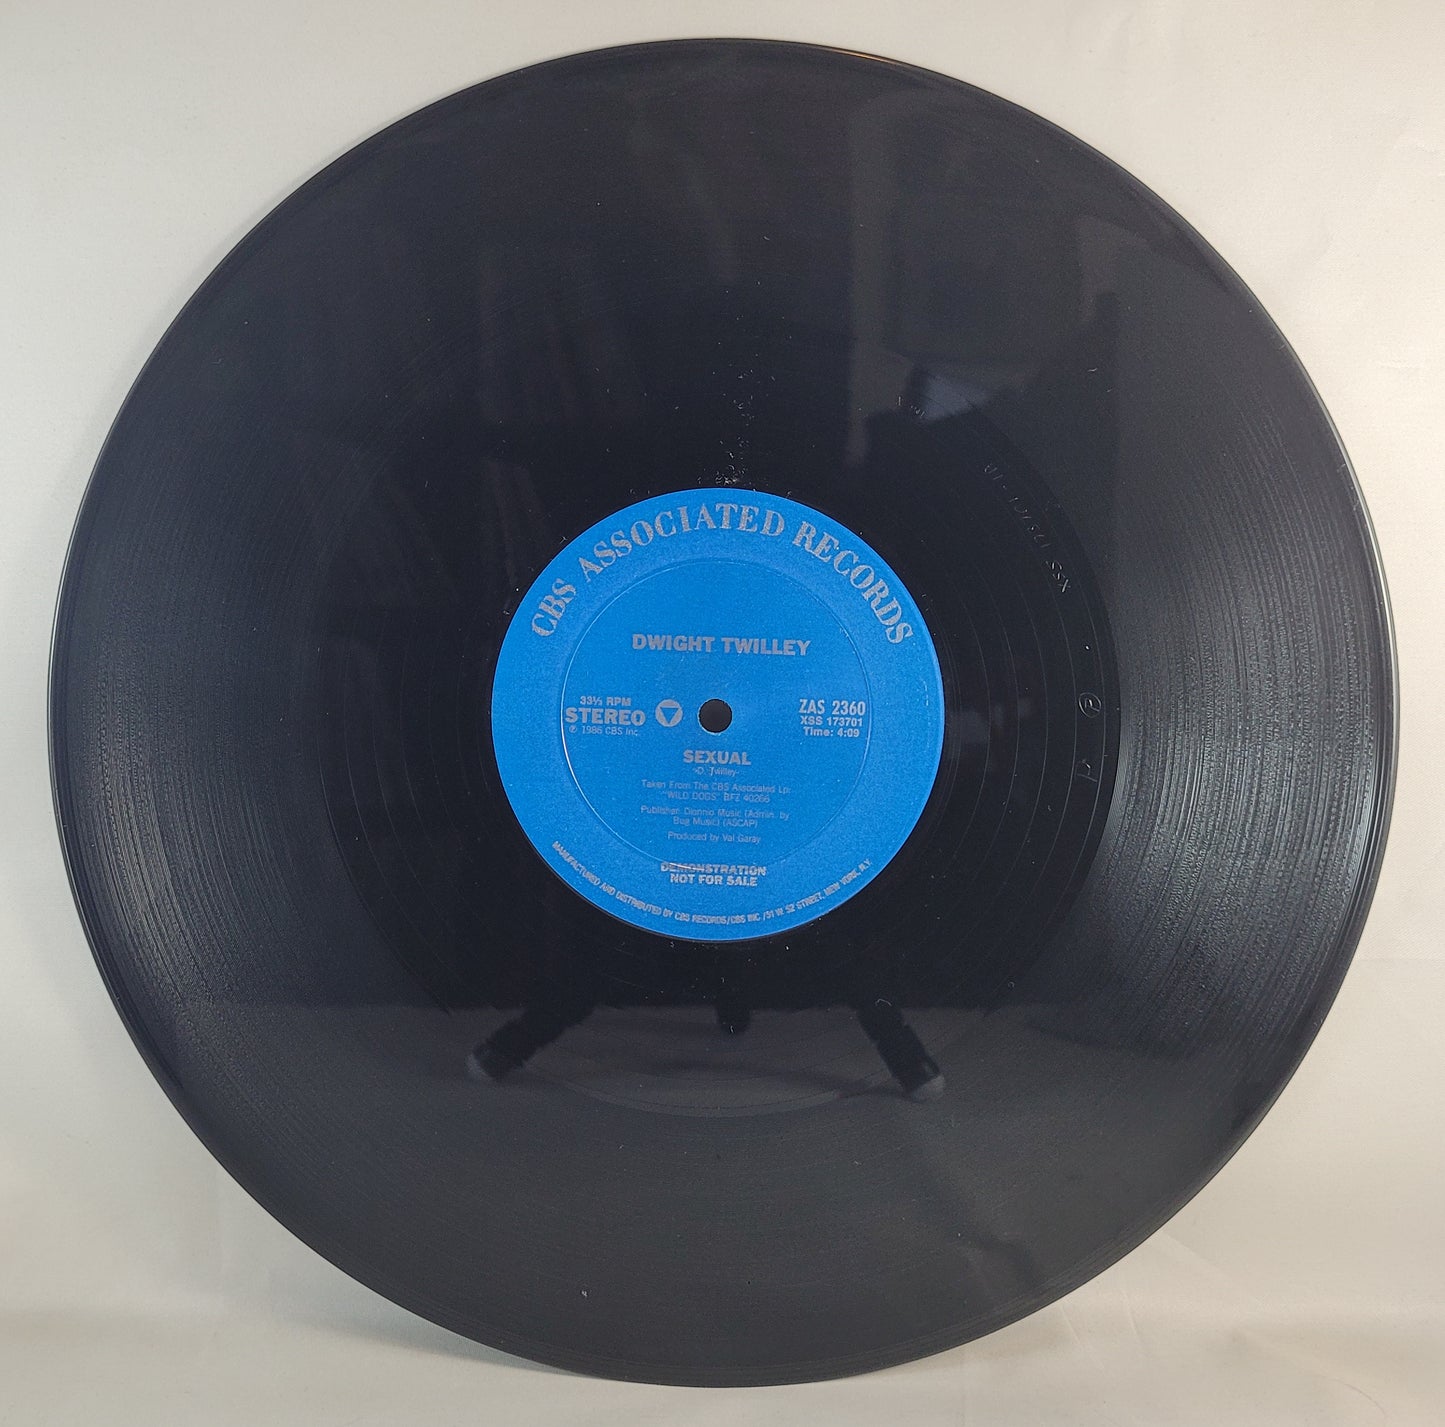 Dwight Twilley - Sexual [Promo] [Vinyl Record 12" Single]